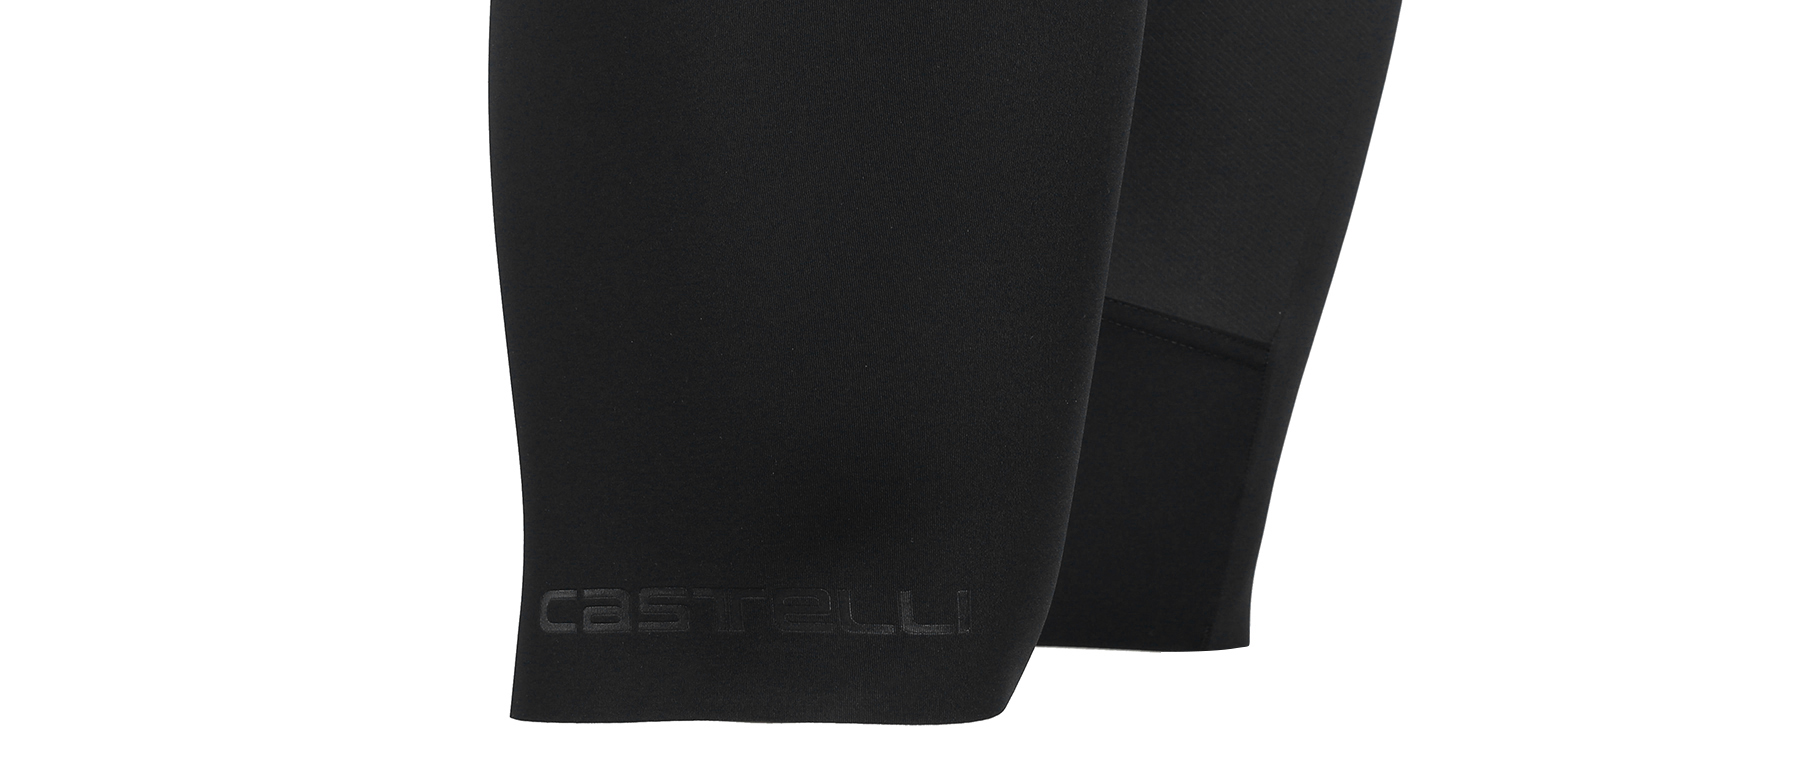 Castelli Free Aero RC W Bib Shorts